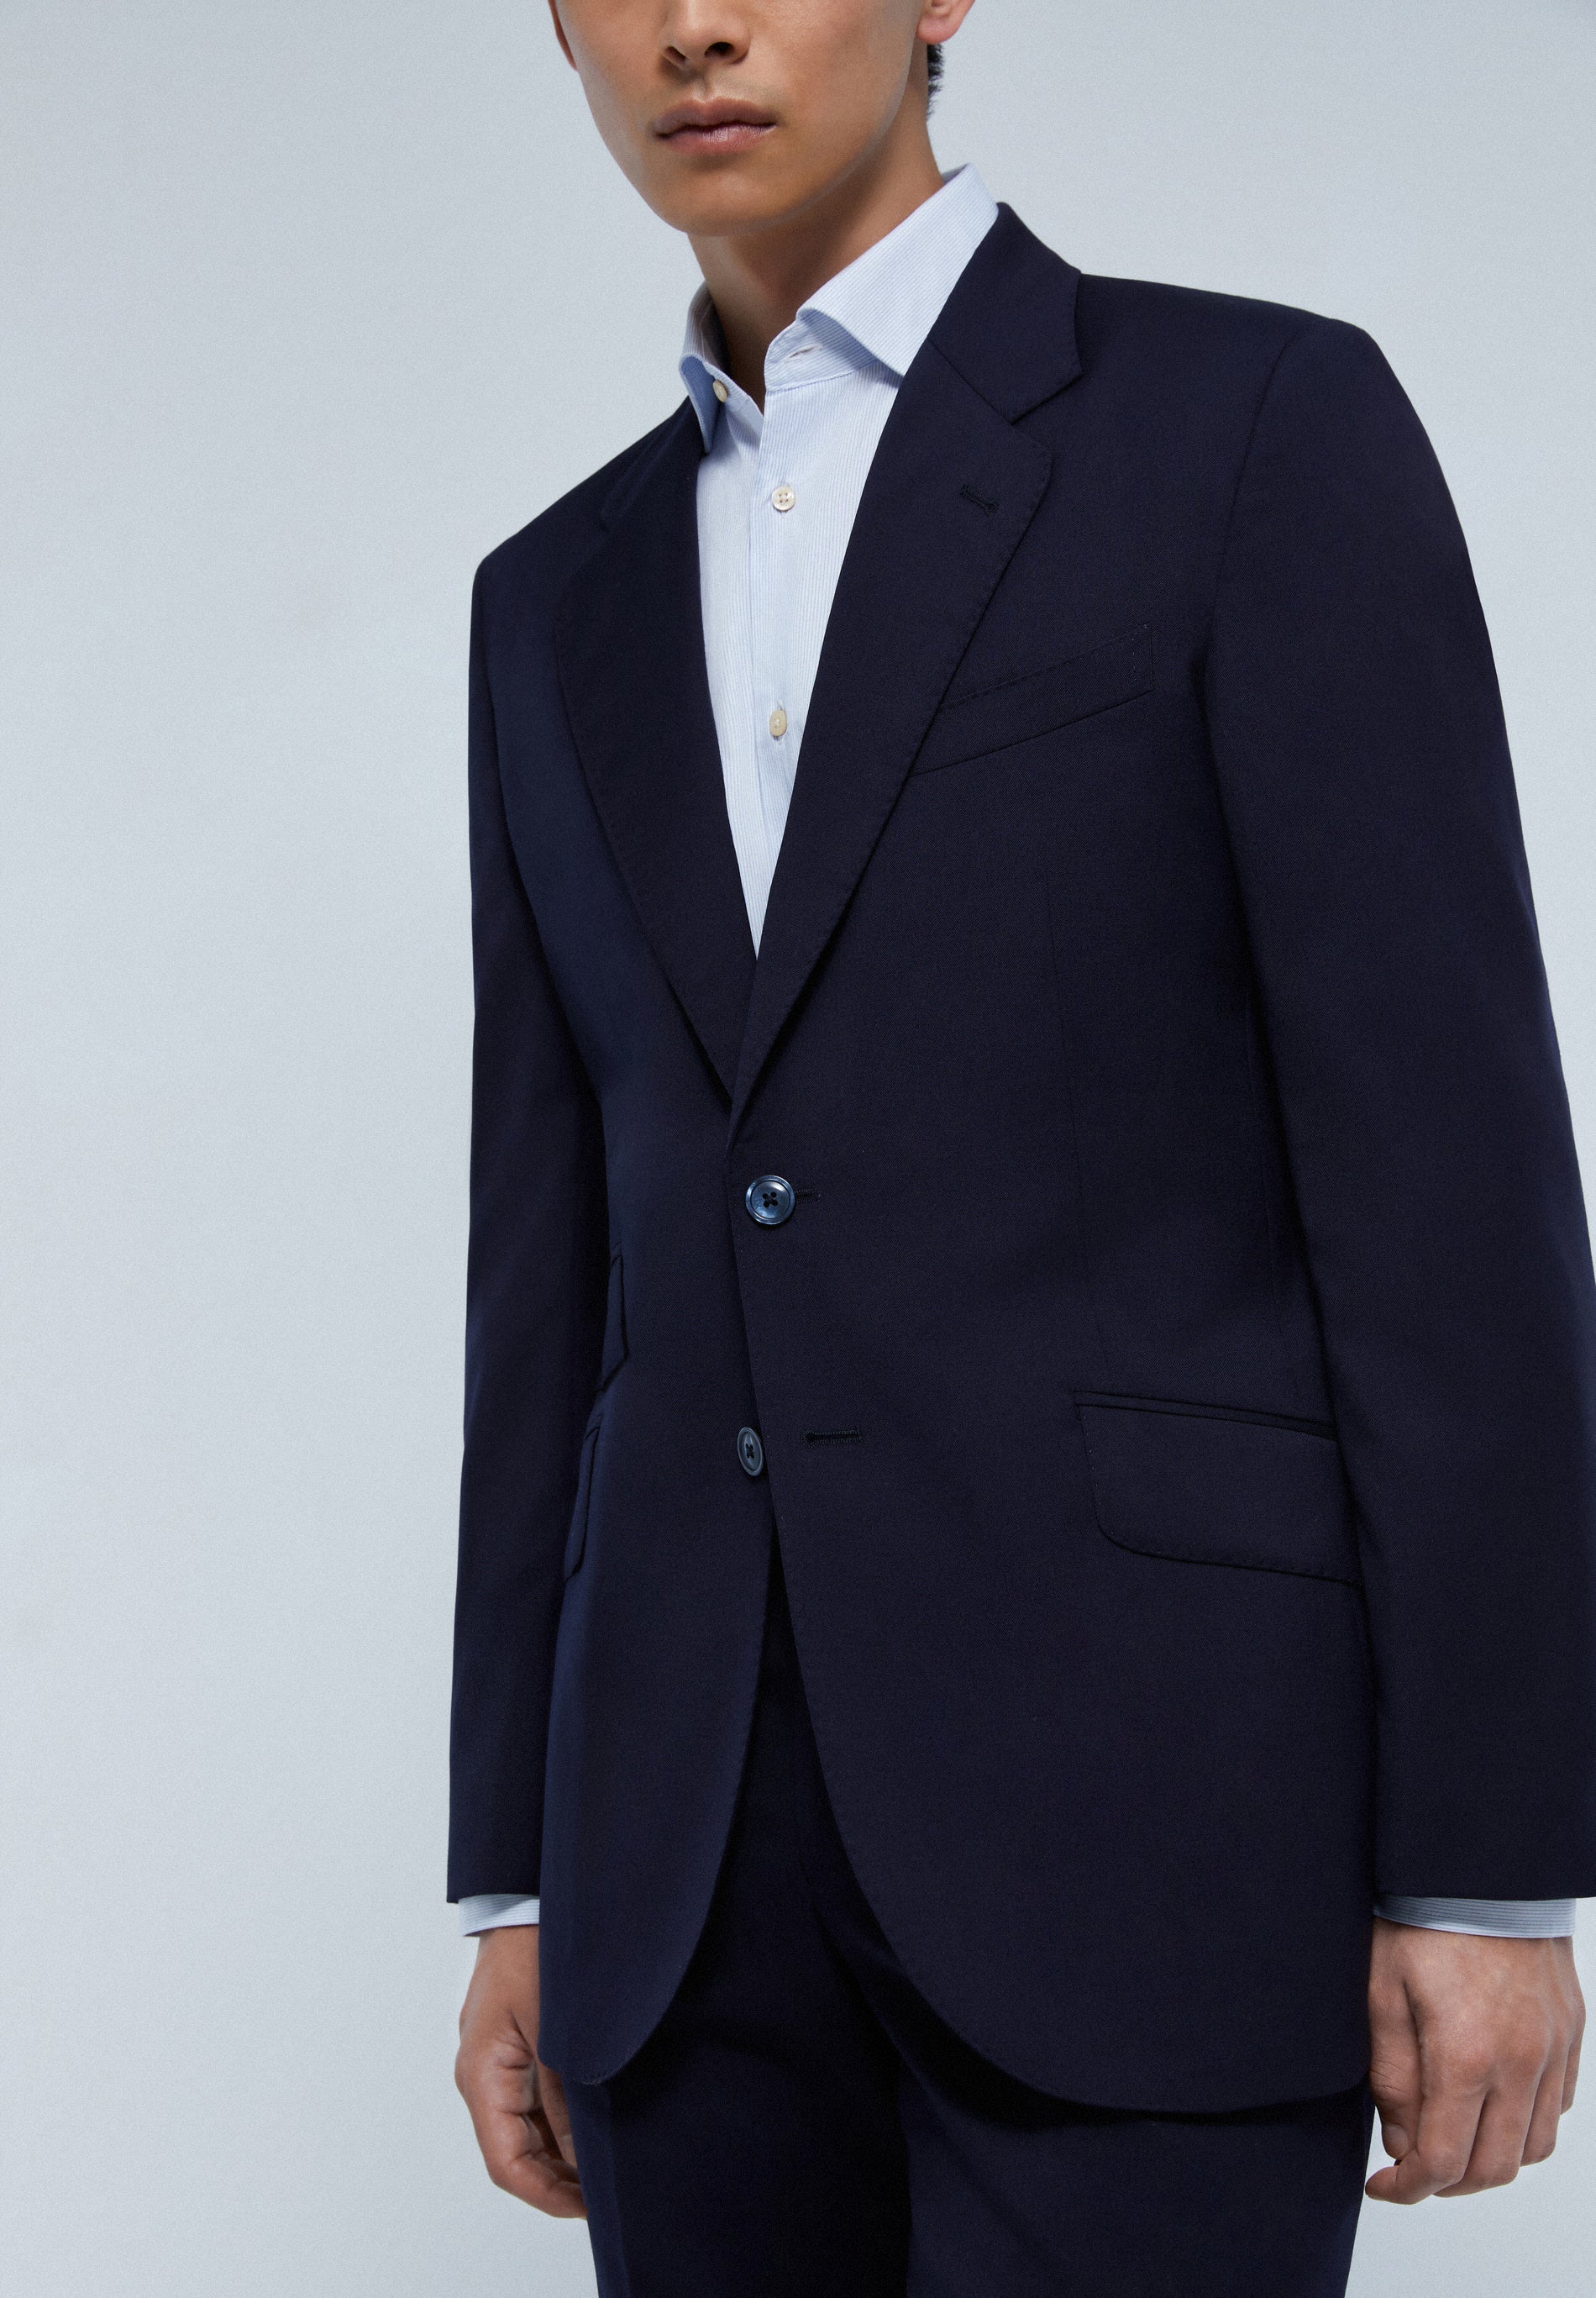 10 Suit Jacket Style Details Men Should Know | Different Types Of Suit  Jackets